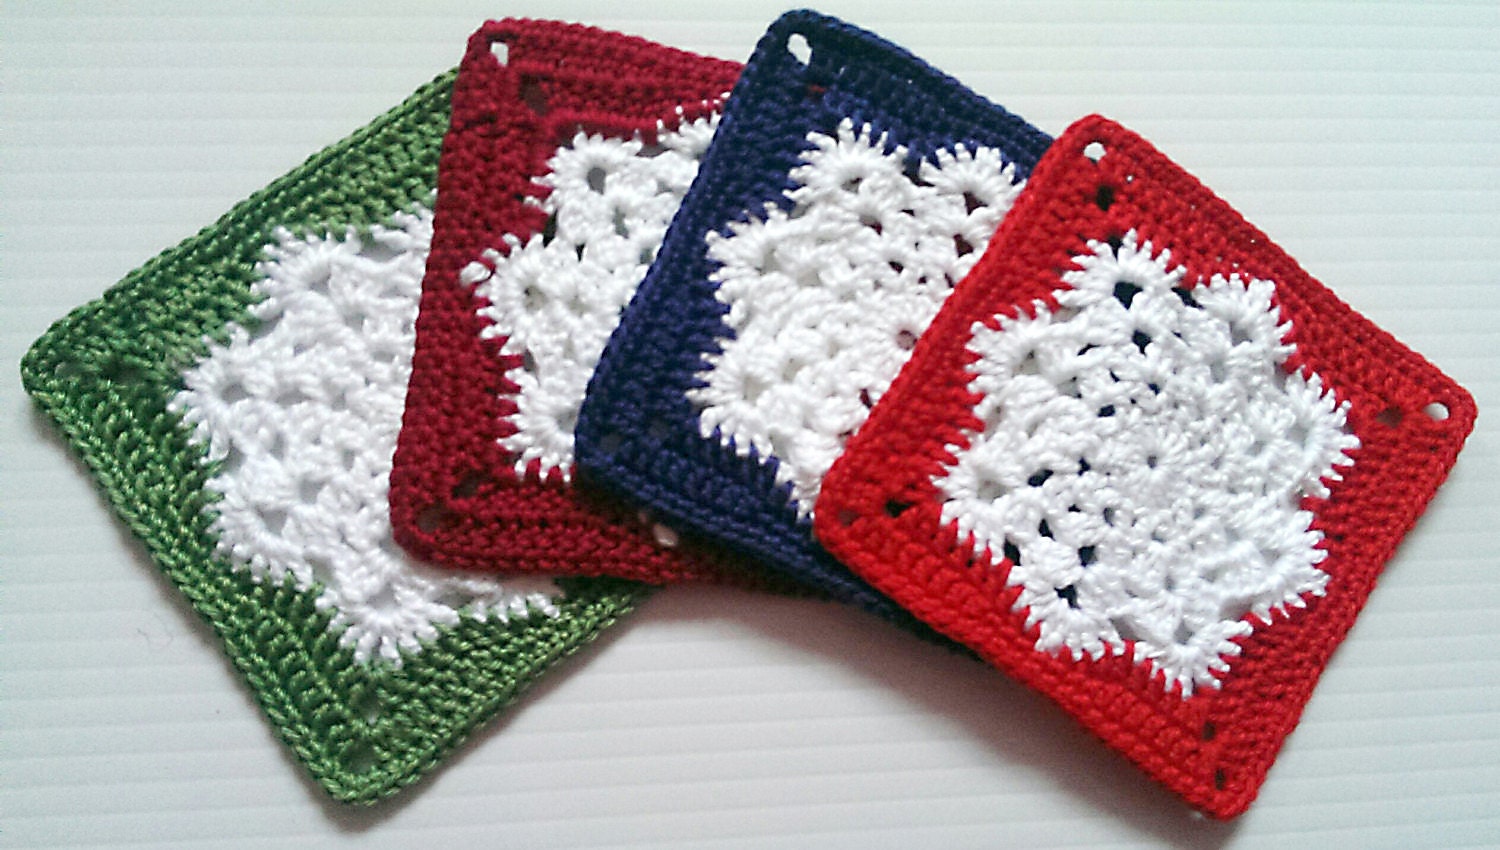 Crocheted snowflake coasters for Christmas crochet coasters